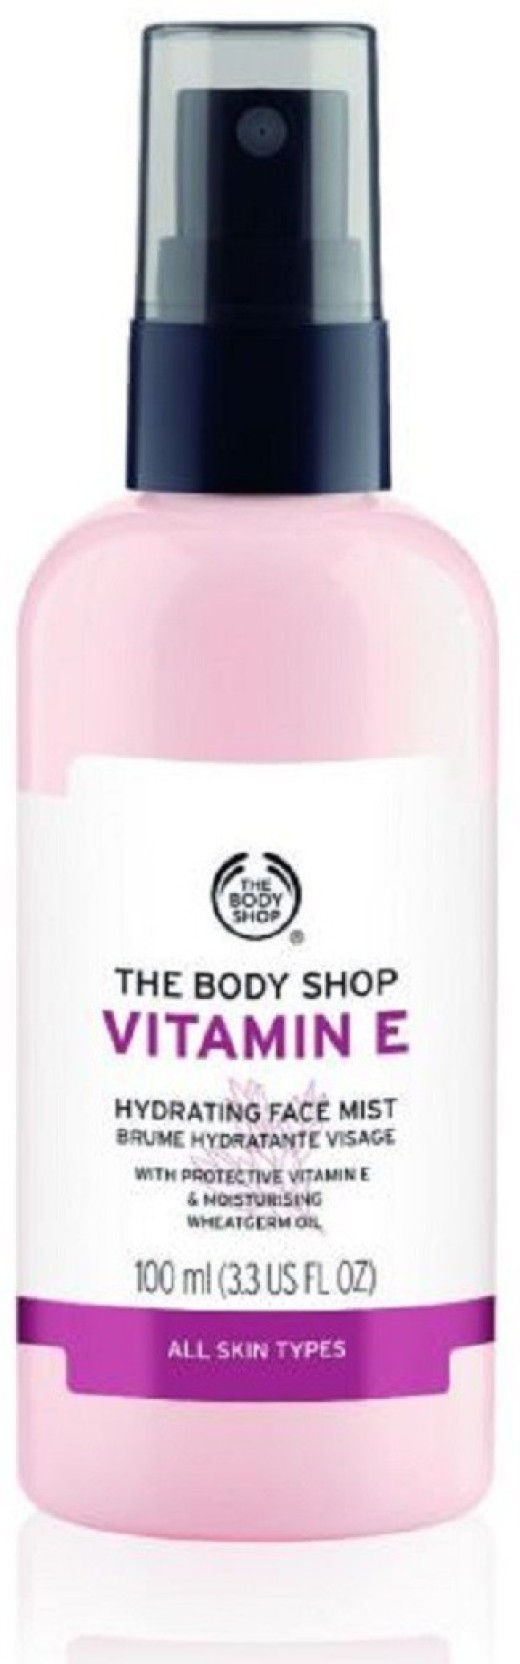 The Body Shop Vitamin E Face Mist Price In India Buy The